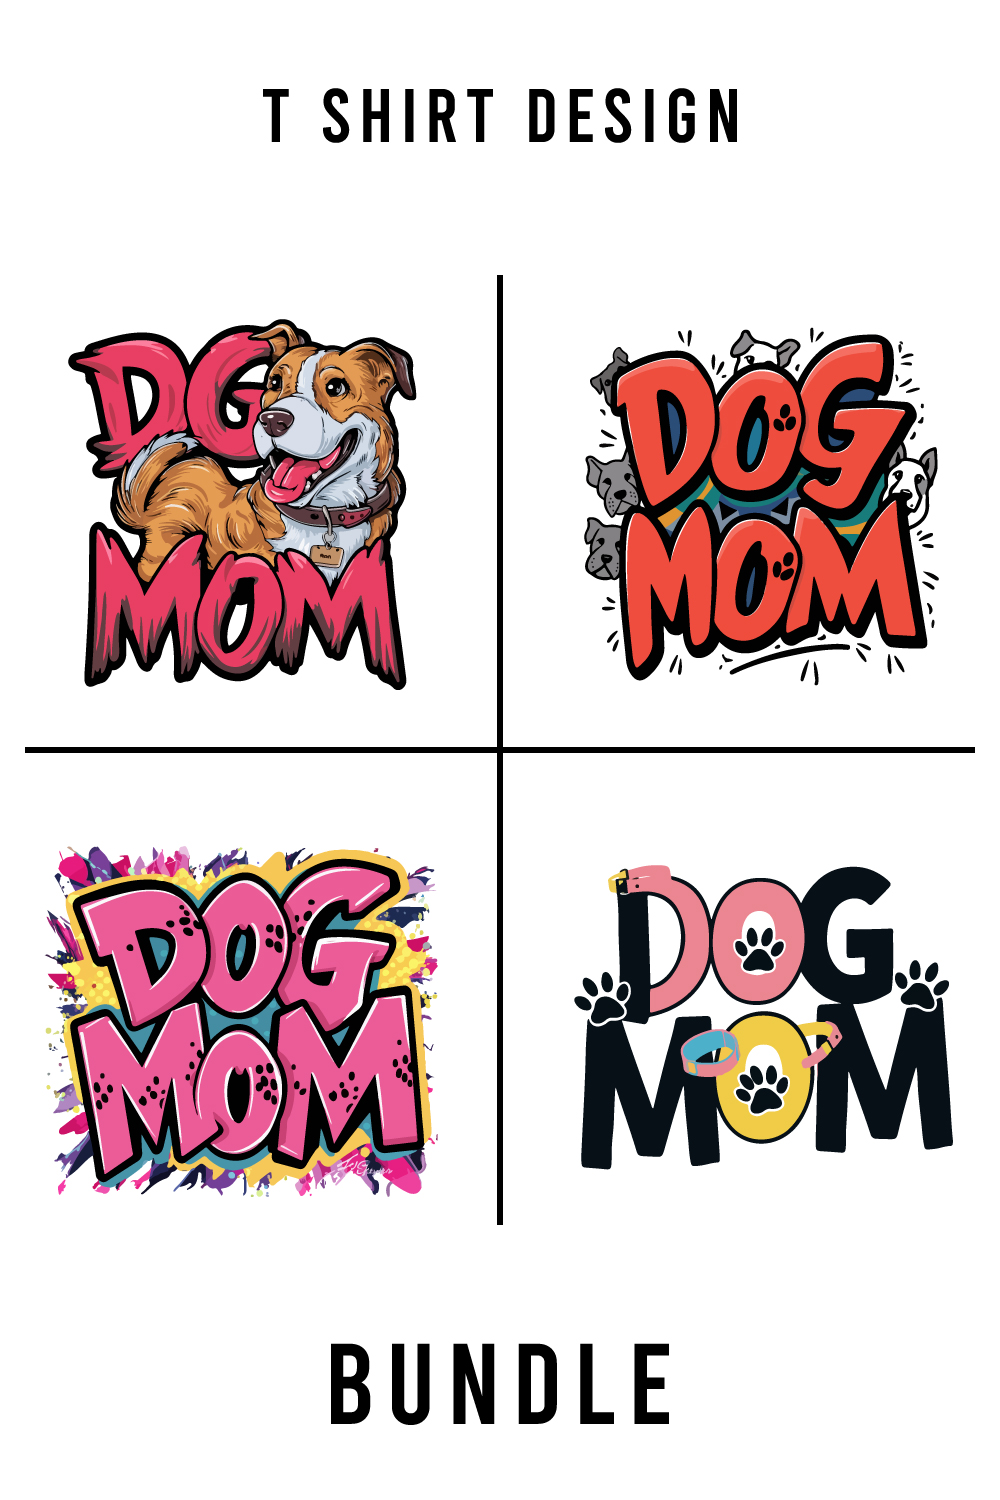 Dog Mom, Dog Mom Shirt, Mother's Day Shirt, Mother's Day Gift, Shirt For Mom, Shirt for Mama, Women's Shirt, T SHIRT DESIGN BUNDLE pinterest preview image.